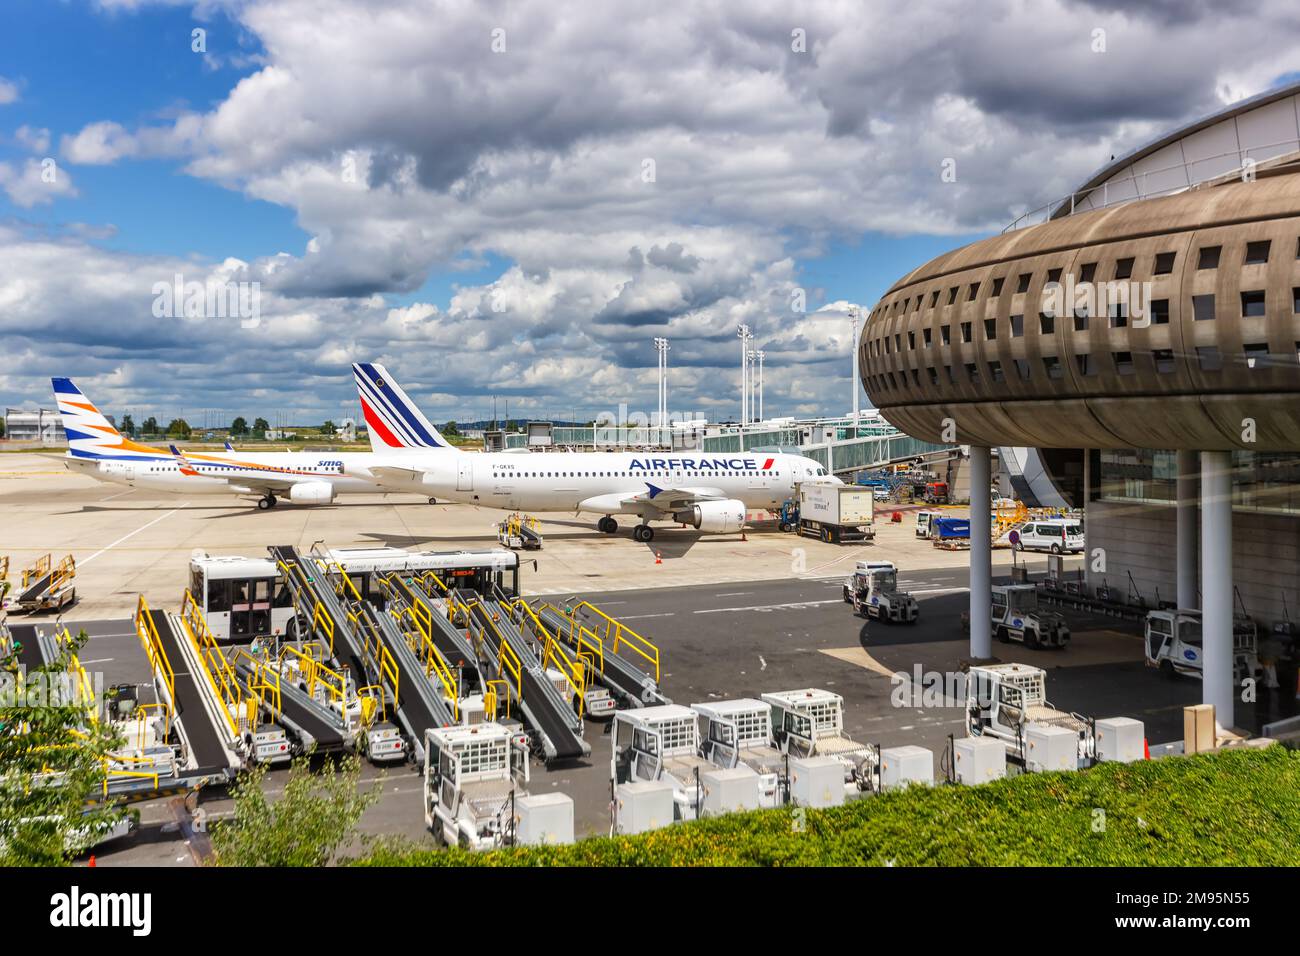 File:Aerial view of Paris-Charles de Gaulle airport.jpg